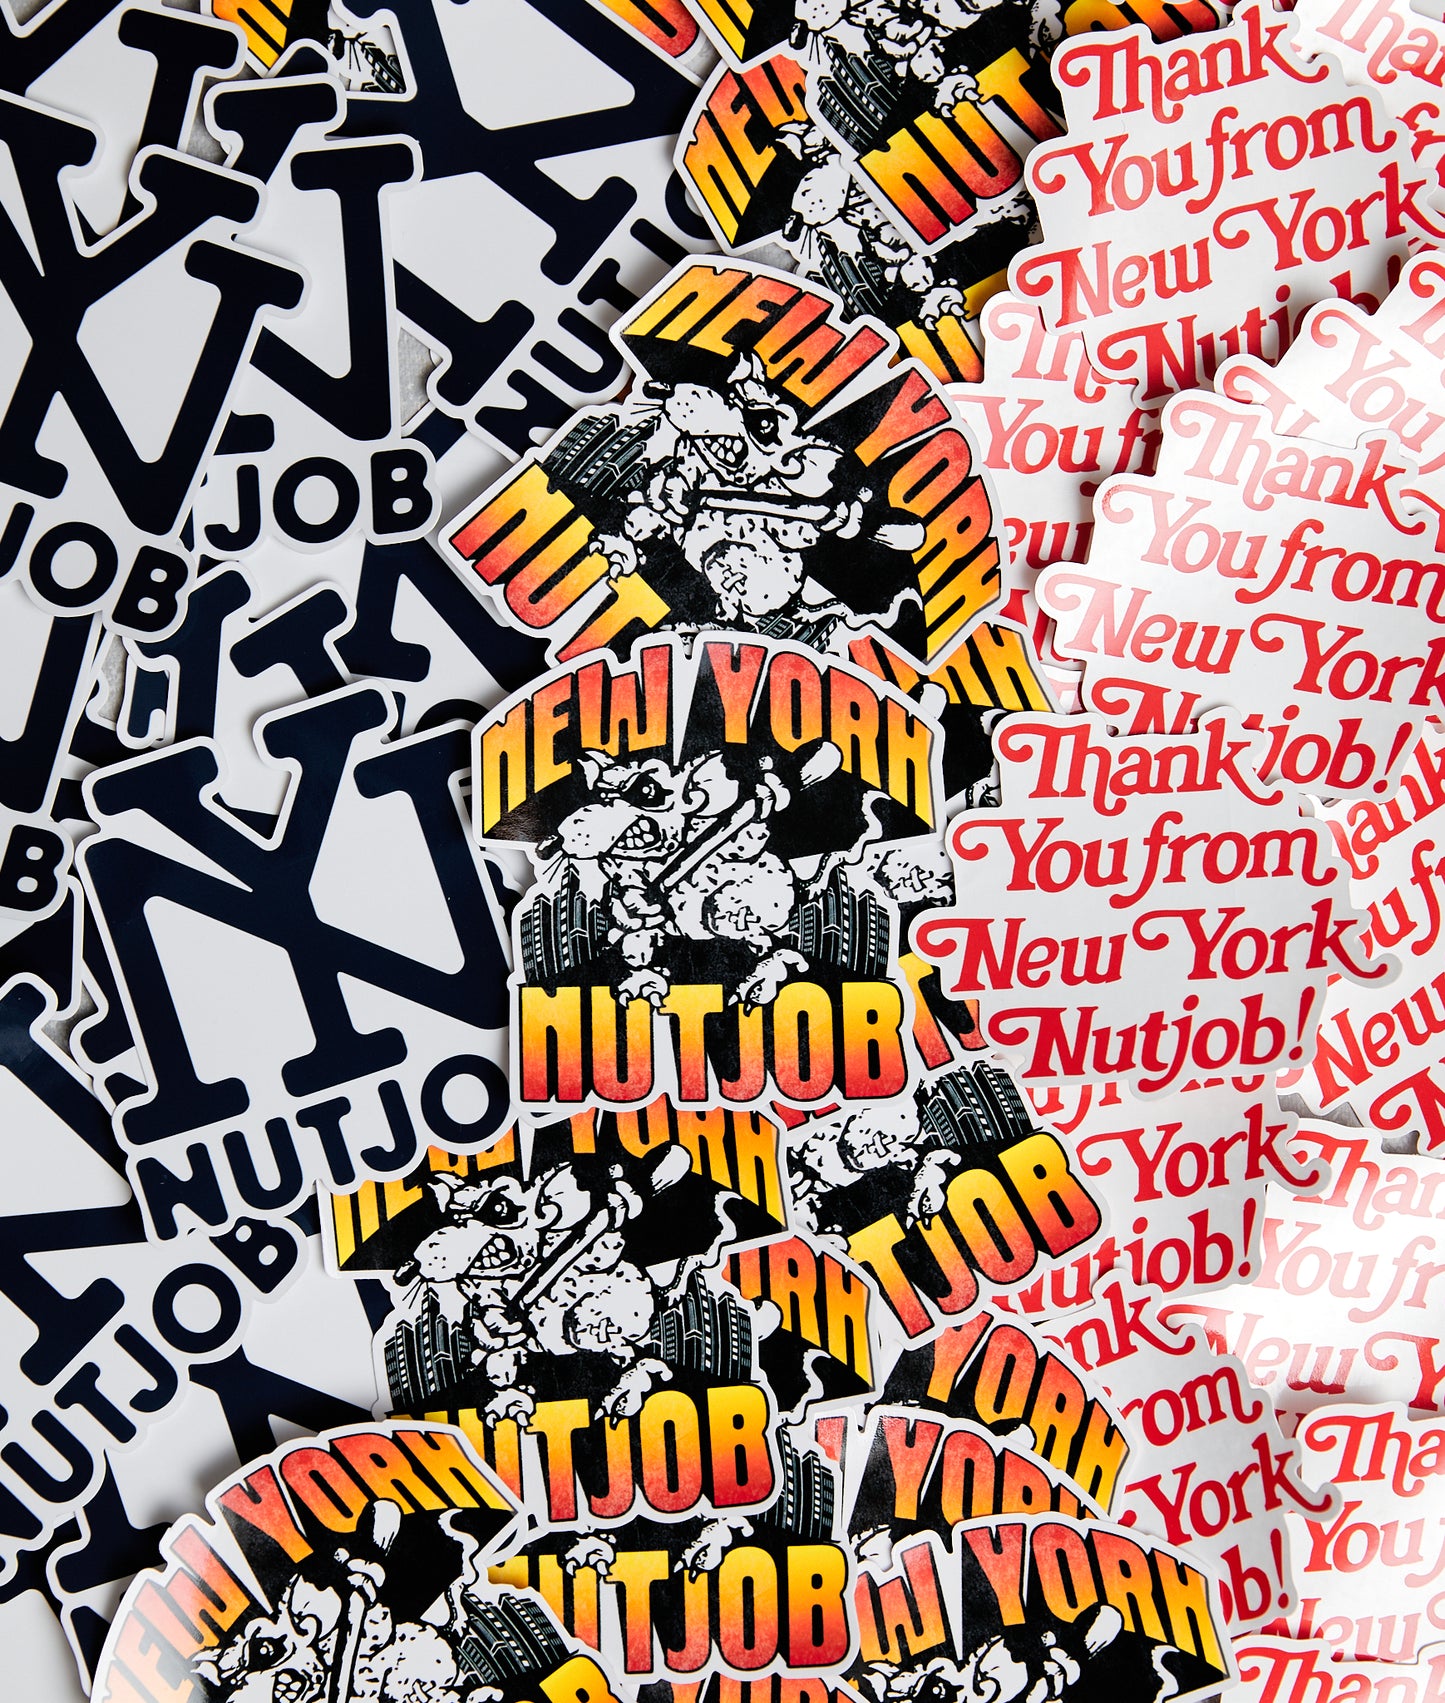 New York Nutjob Sticker Pack